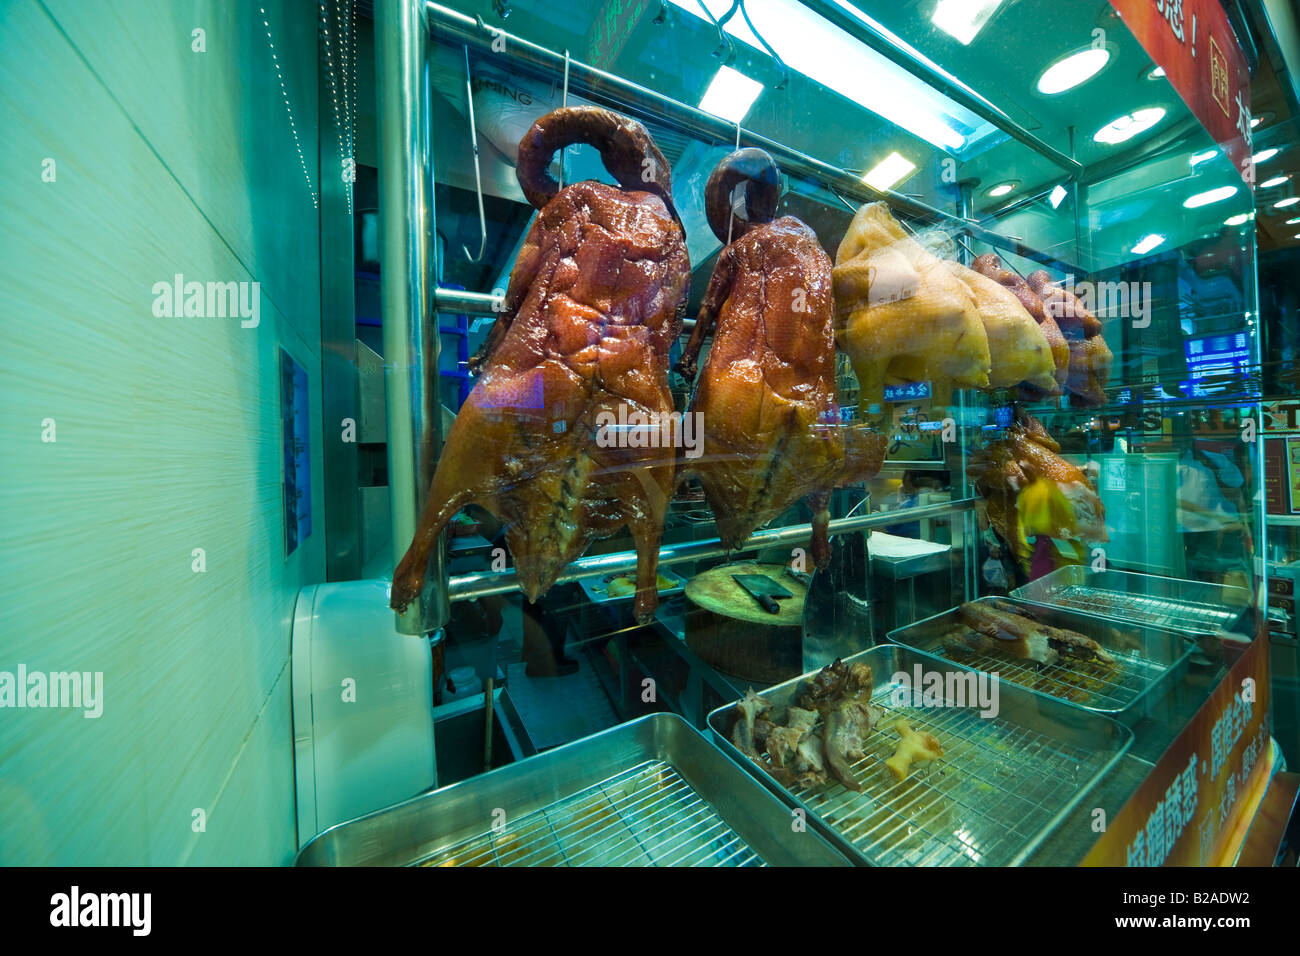 Beängstigend Essen oder leckere Ente? Schaufenster der Nudel-Restaurant in Mong Kok, Kowloon, Hong Kong, China. Stockfoto